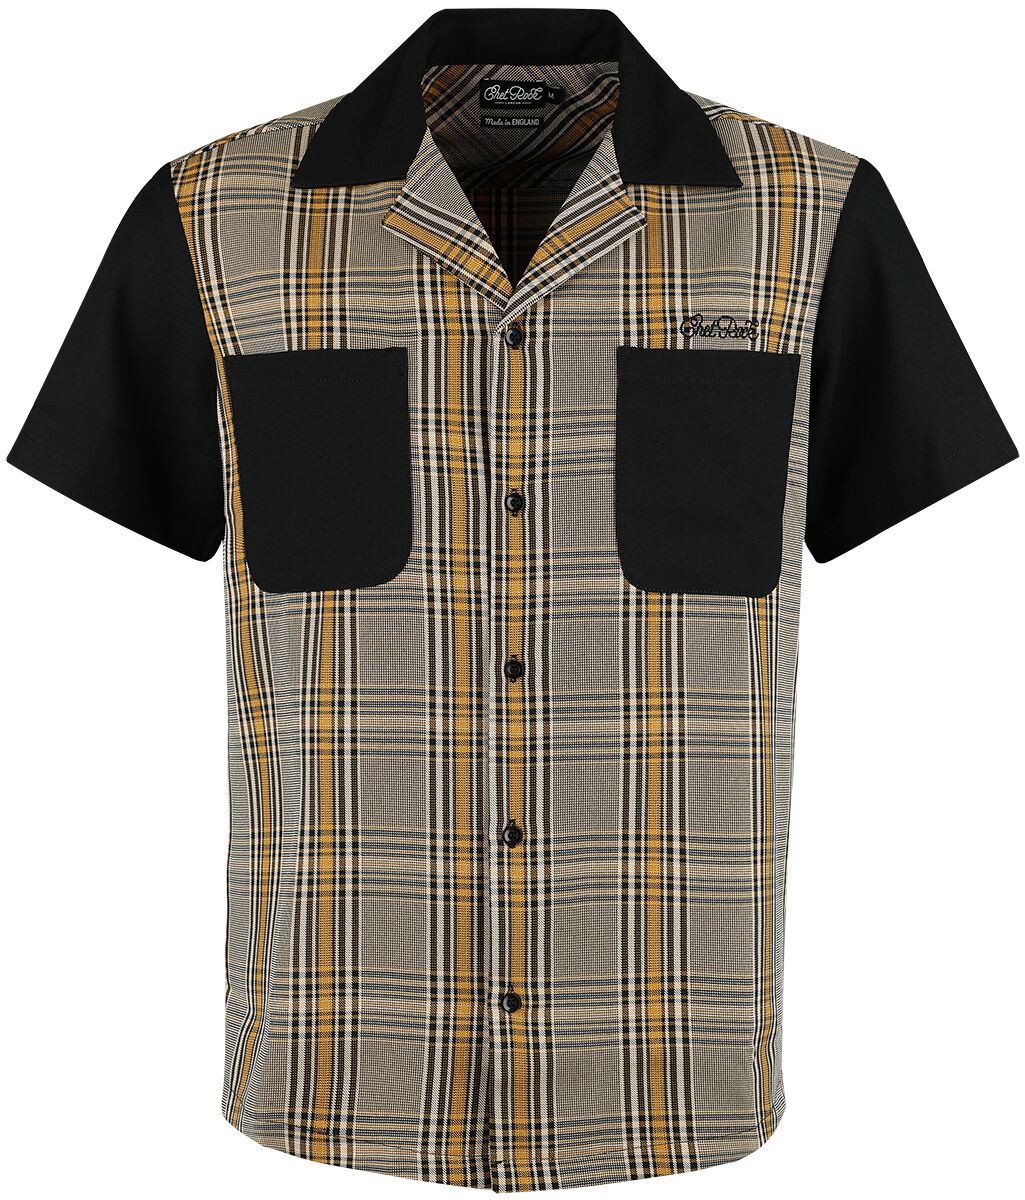 Chet Rock - Rockabilly Kurzarmhemd - Douglas Shirt - S bis 4XL - für Männer - Größe XL - multicolor